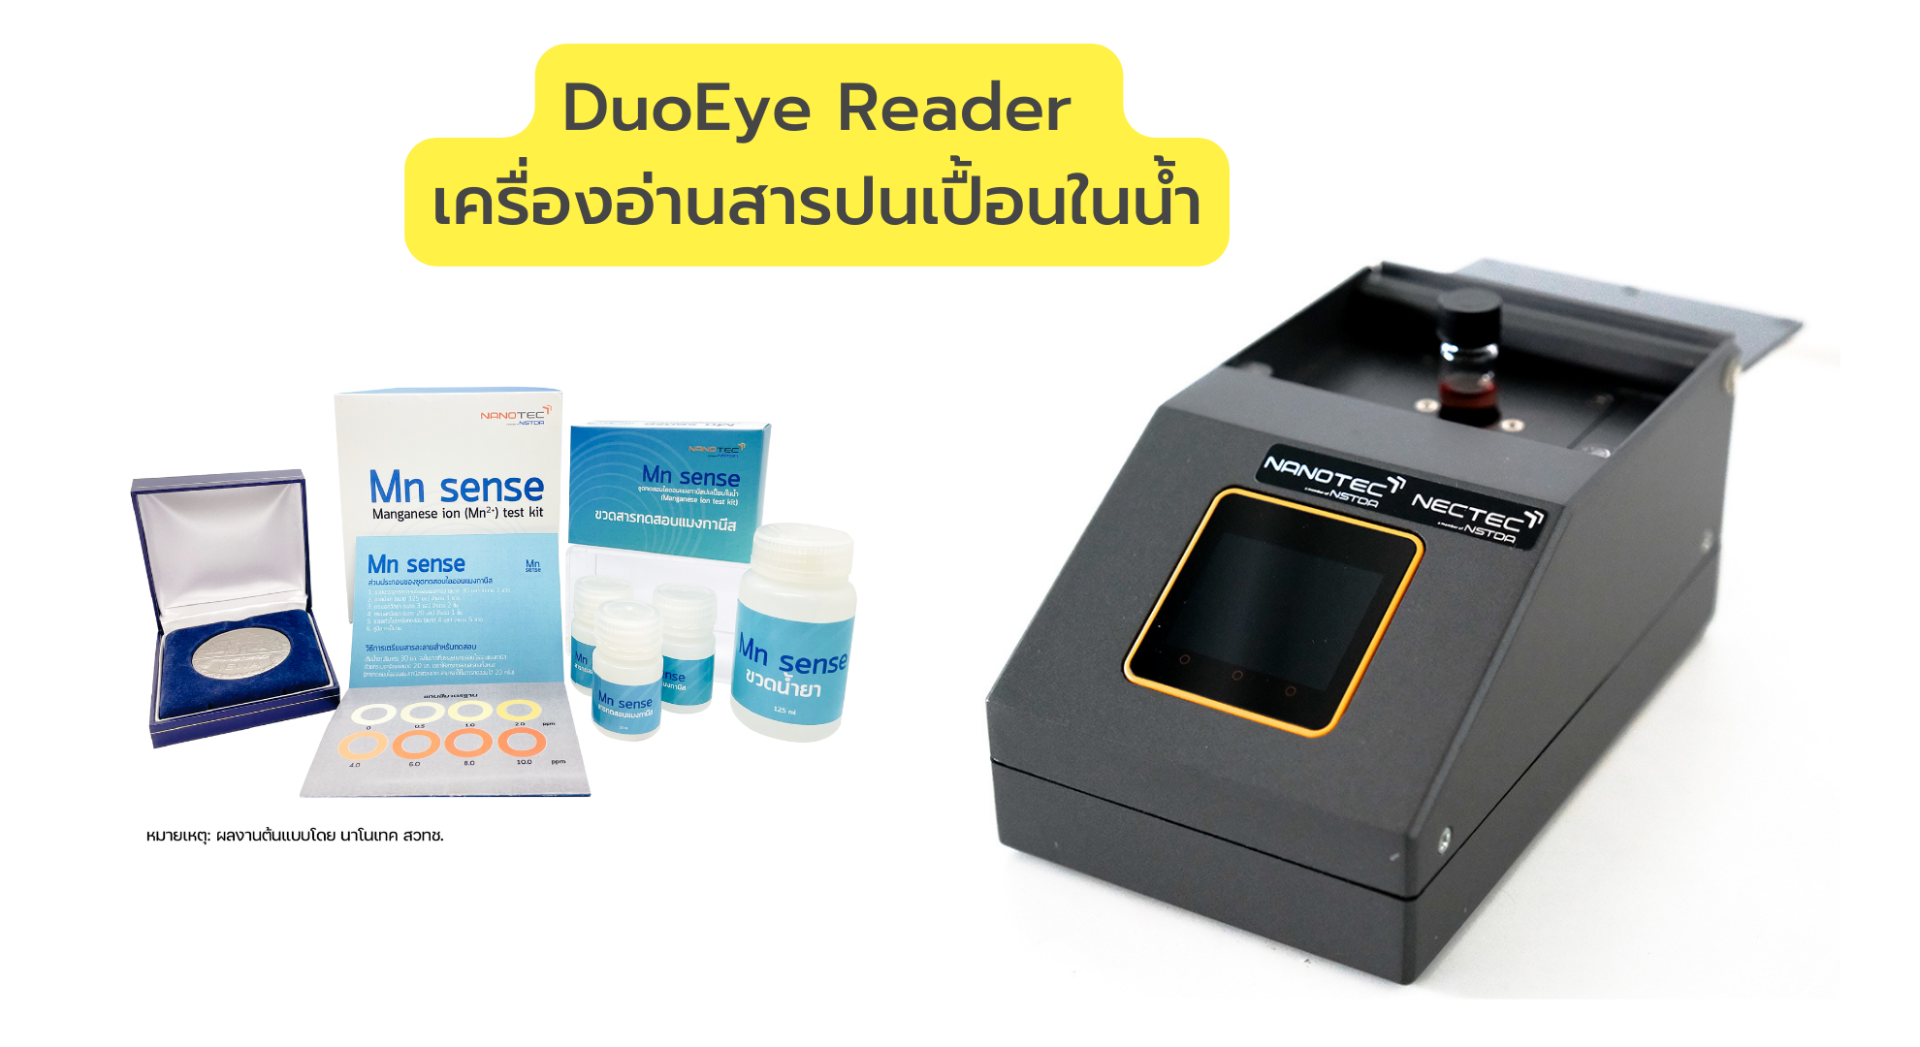 DuoEye Reader เครื่องอ่านสารปนเปื้อนในน้ำ